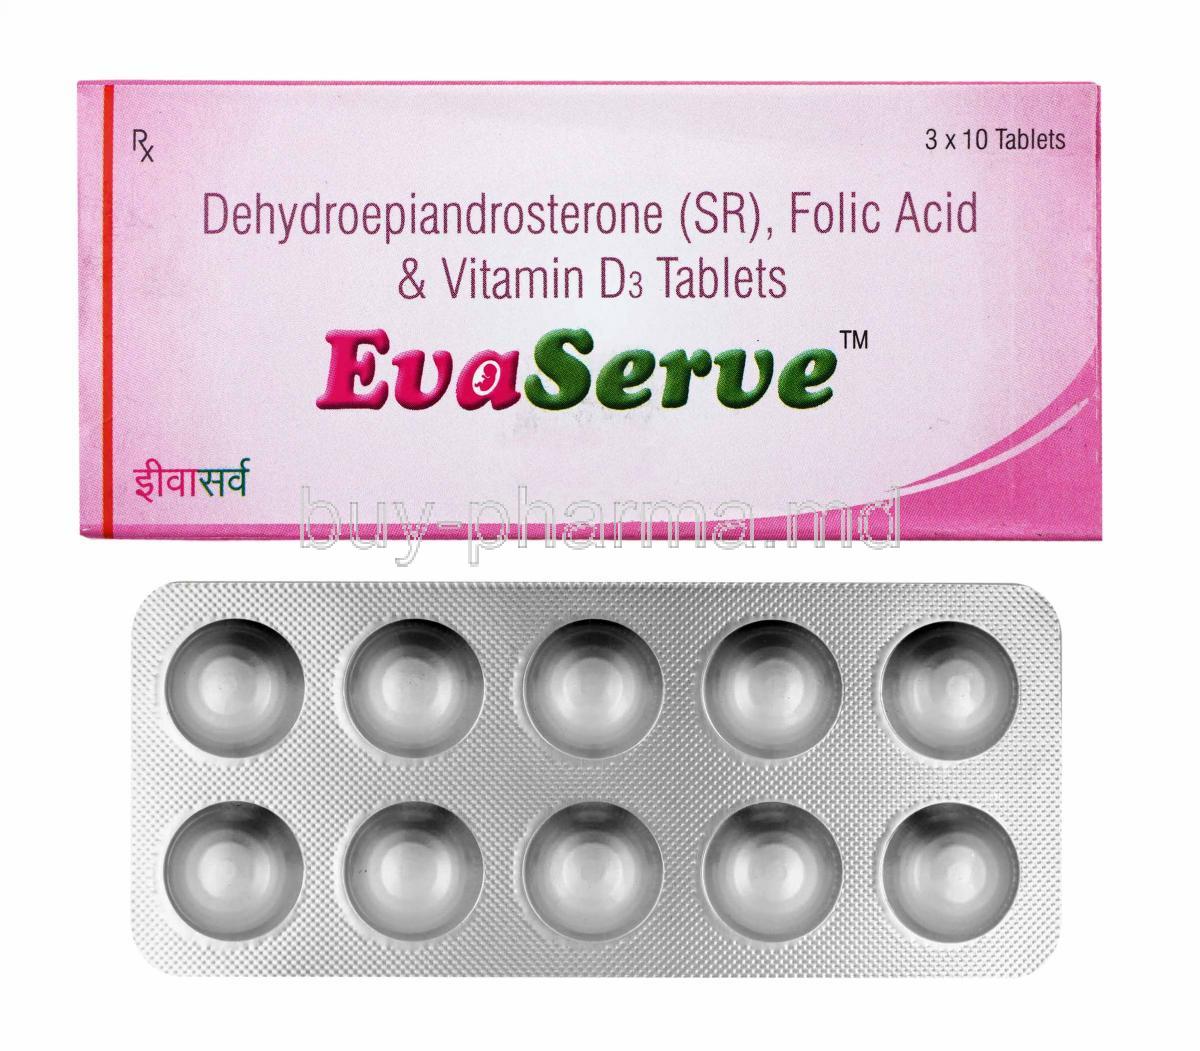 Evaserve, Dehydroepiandrosterone, Folic Acid and Vitamin D3 box and tablets